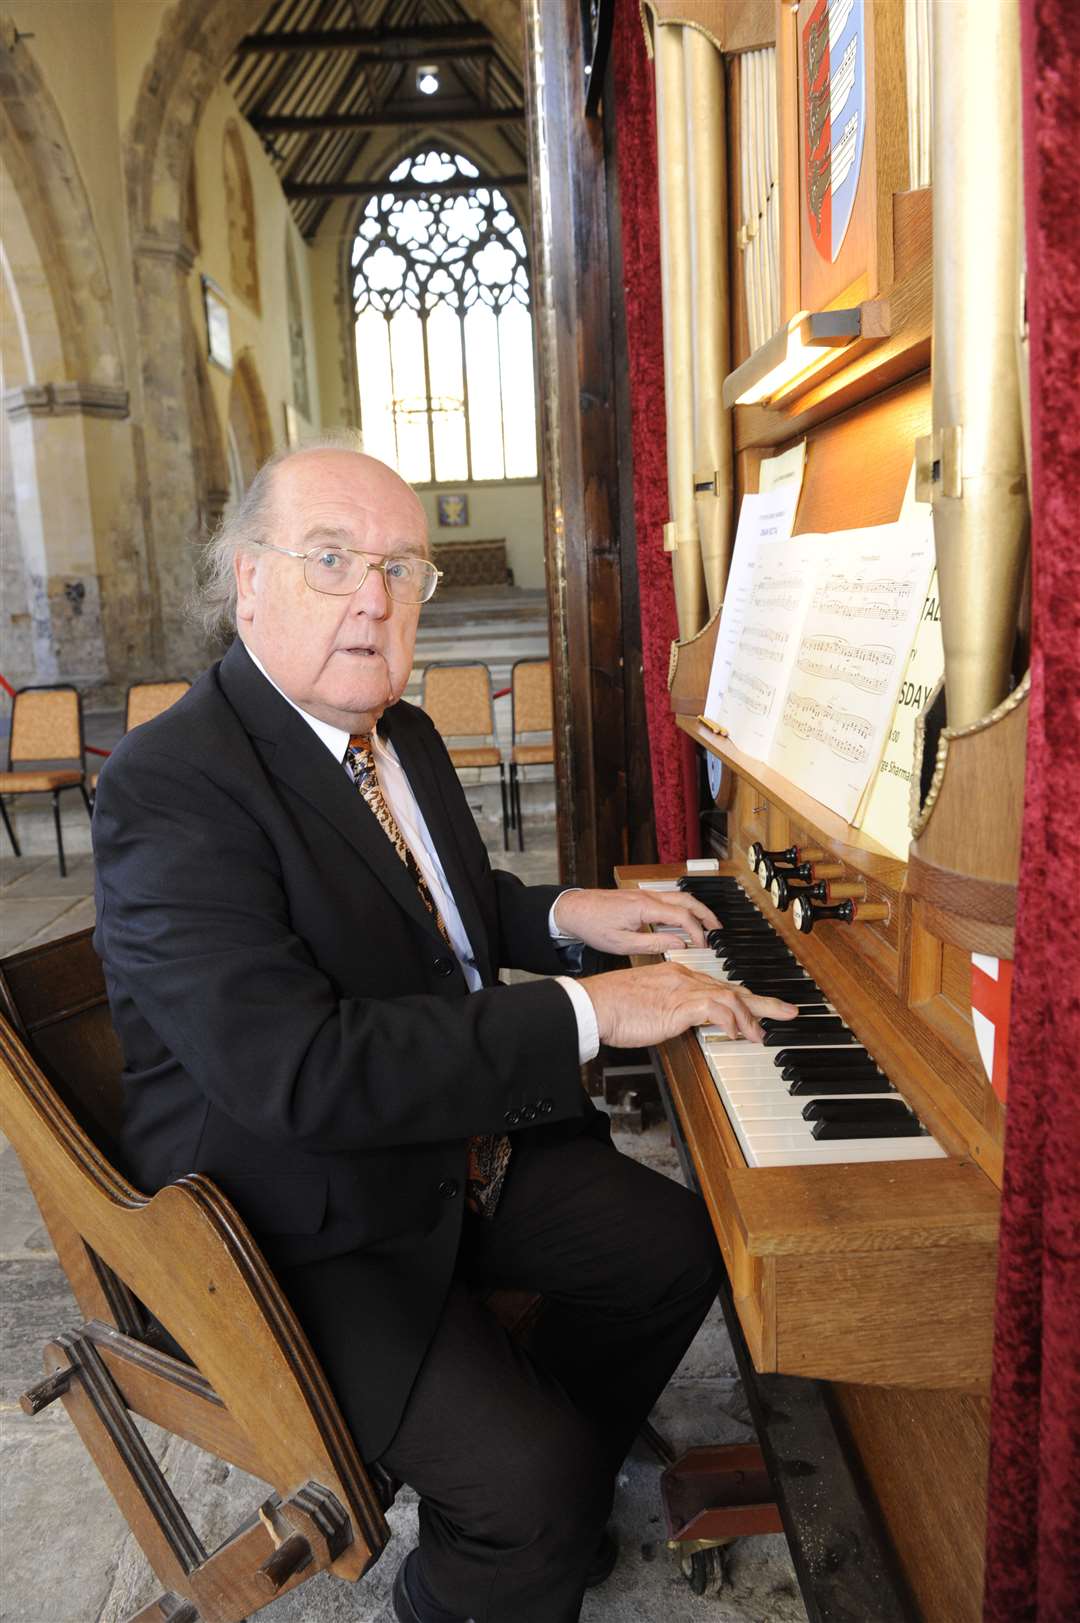 George Sharman plays the organ at the church